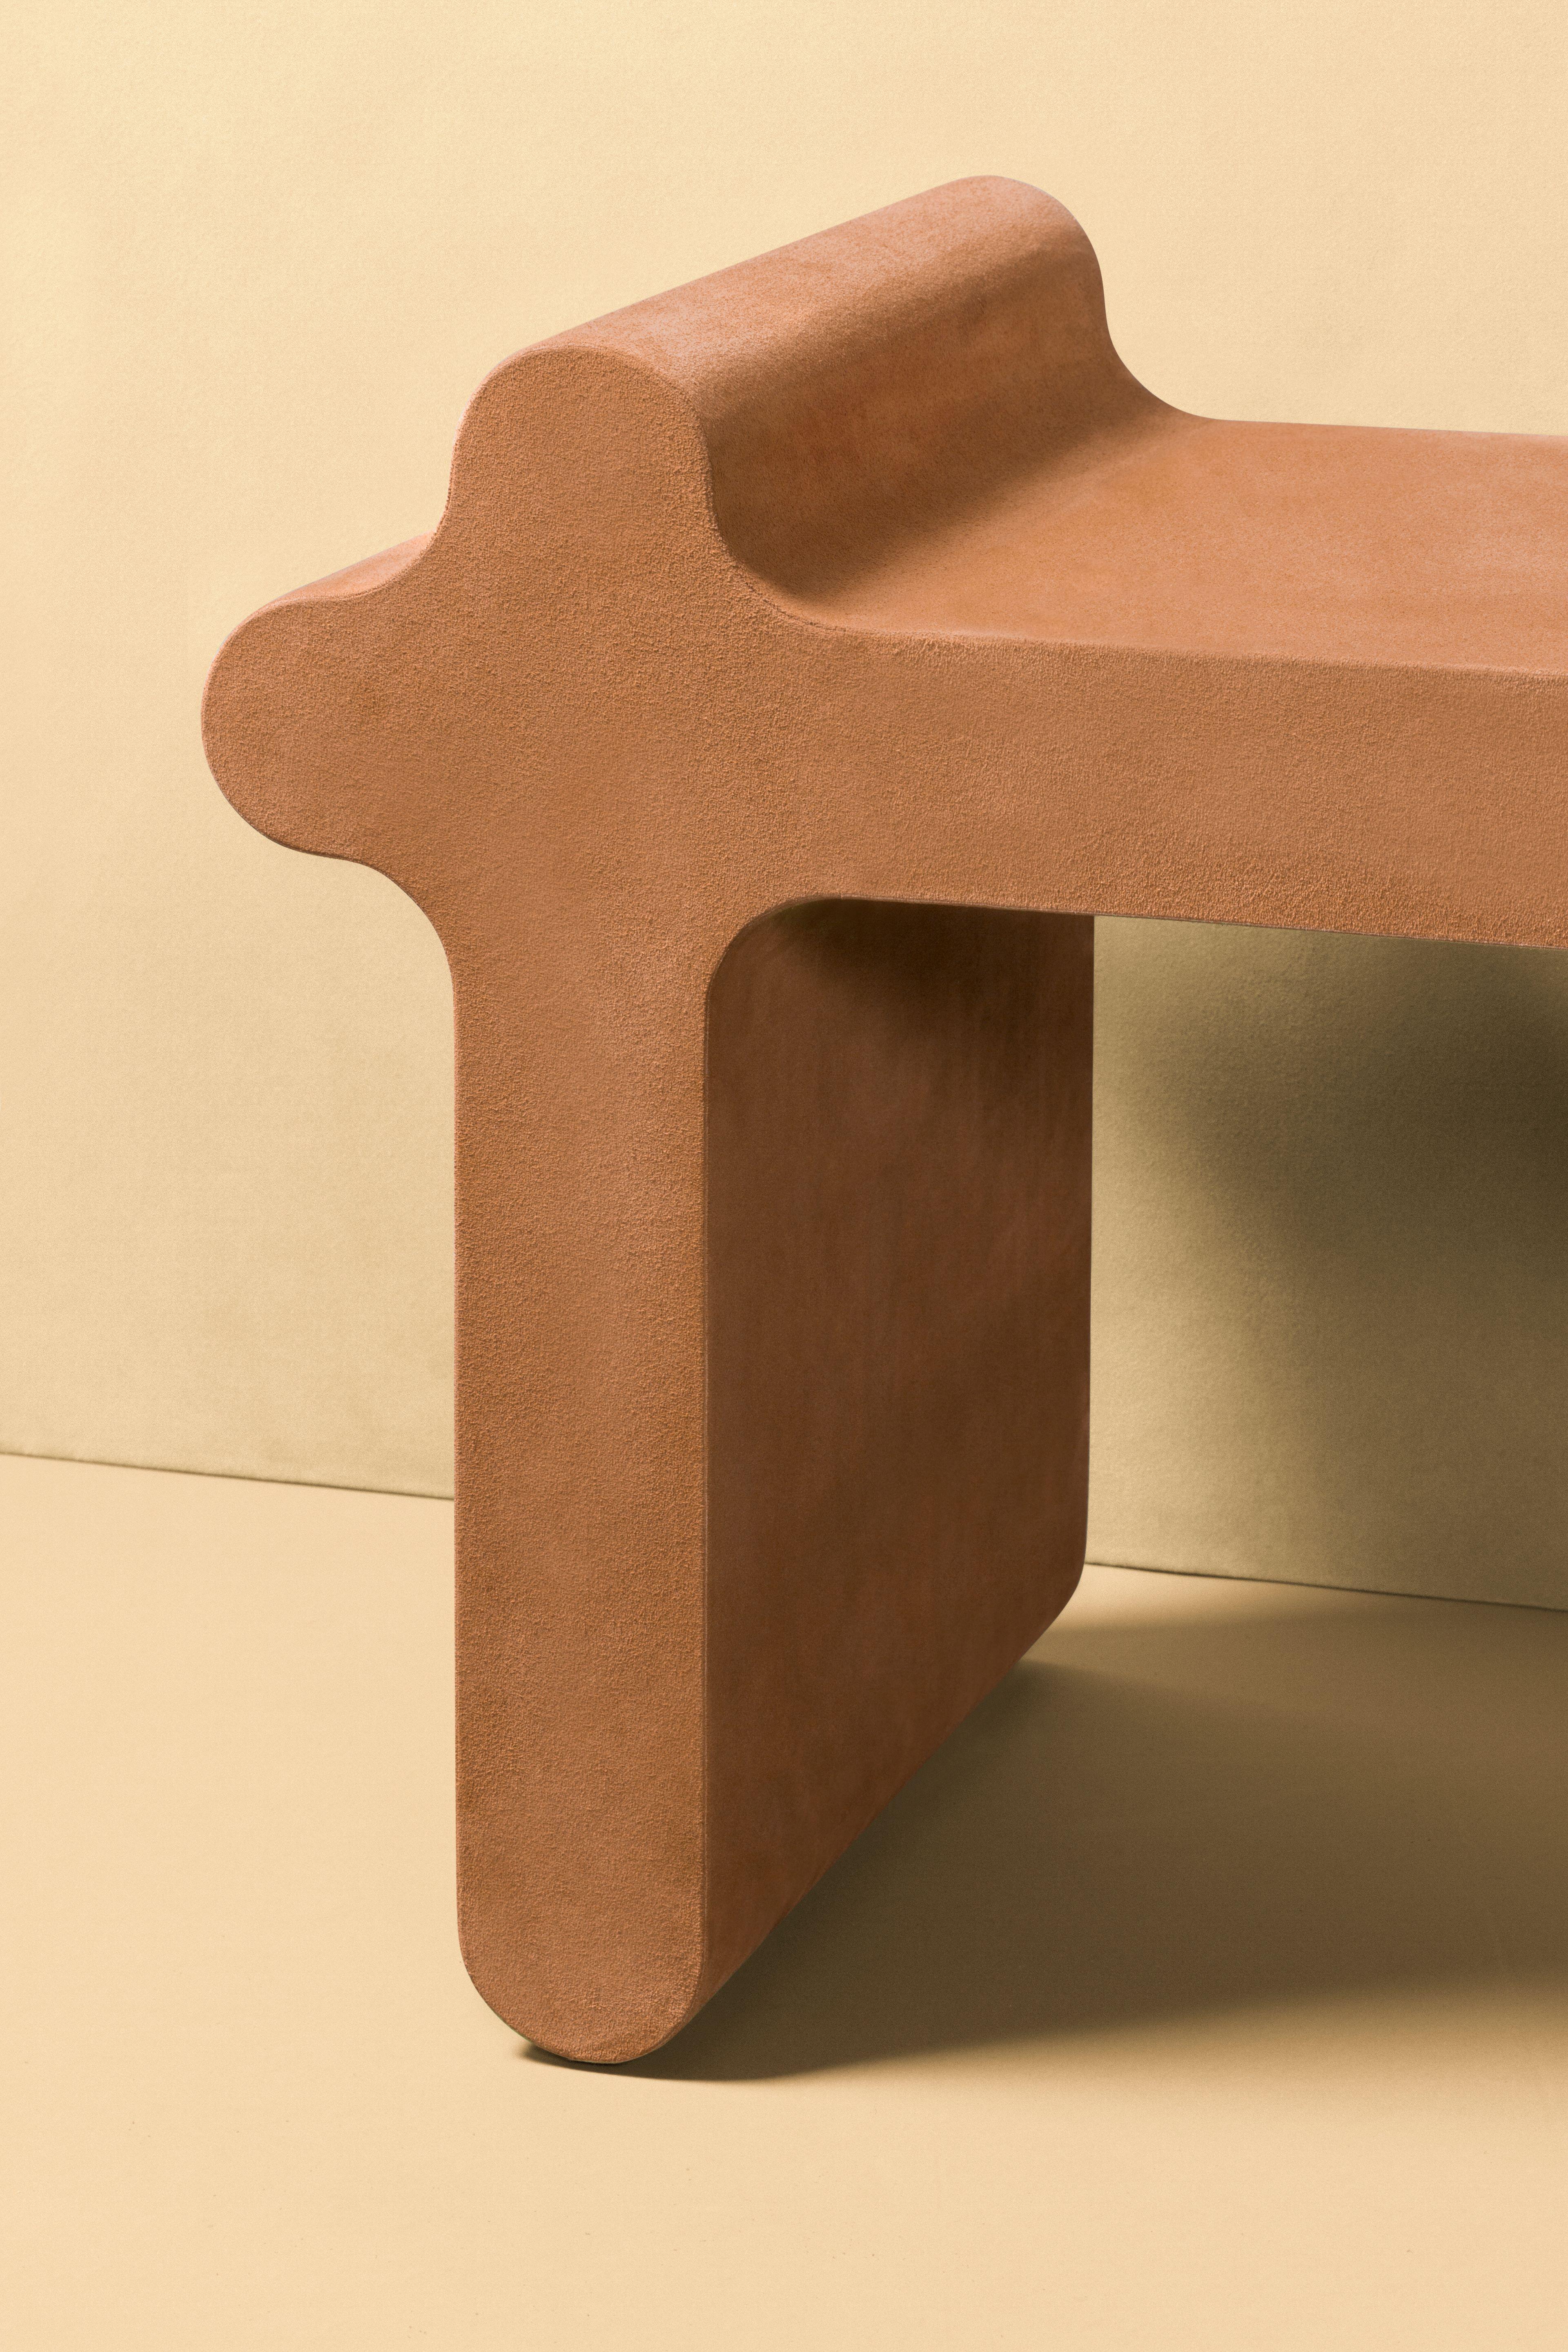 Italian Bench Suede Francesco Balzano for Giobagnara Ossicle Leather Bench No. 1 For Sale